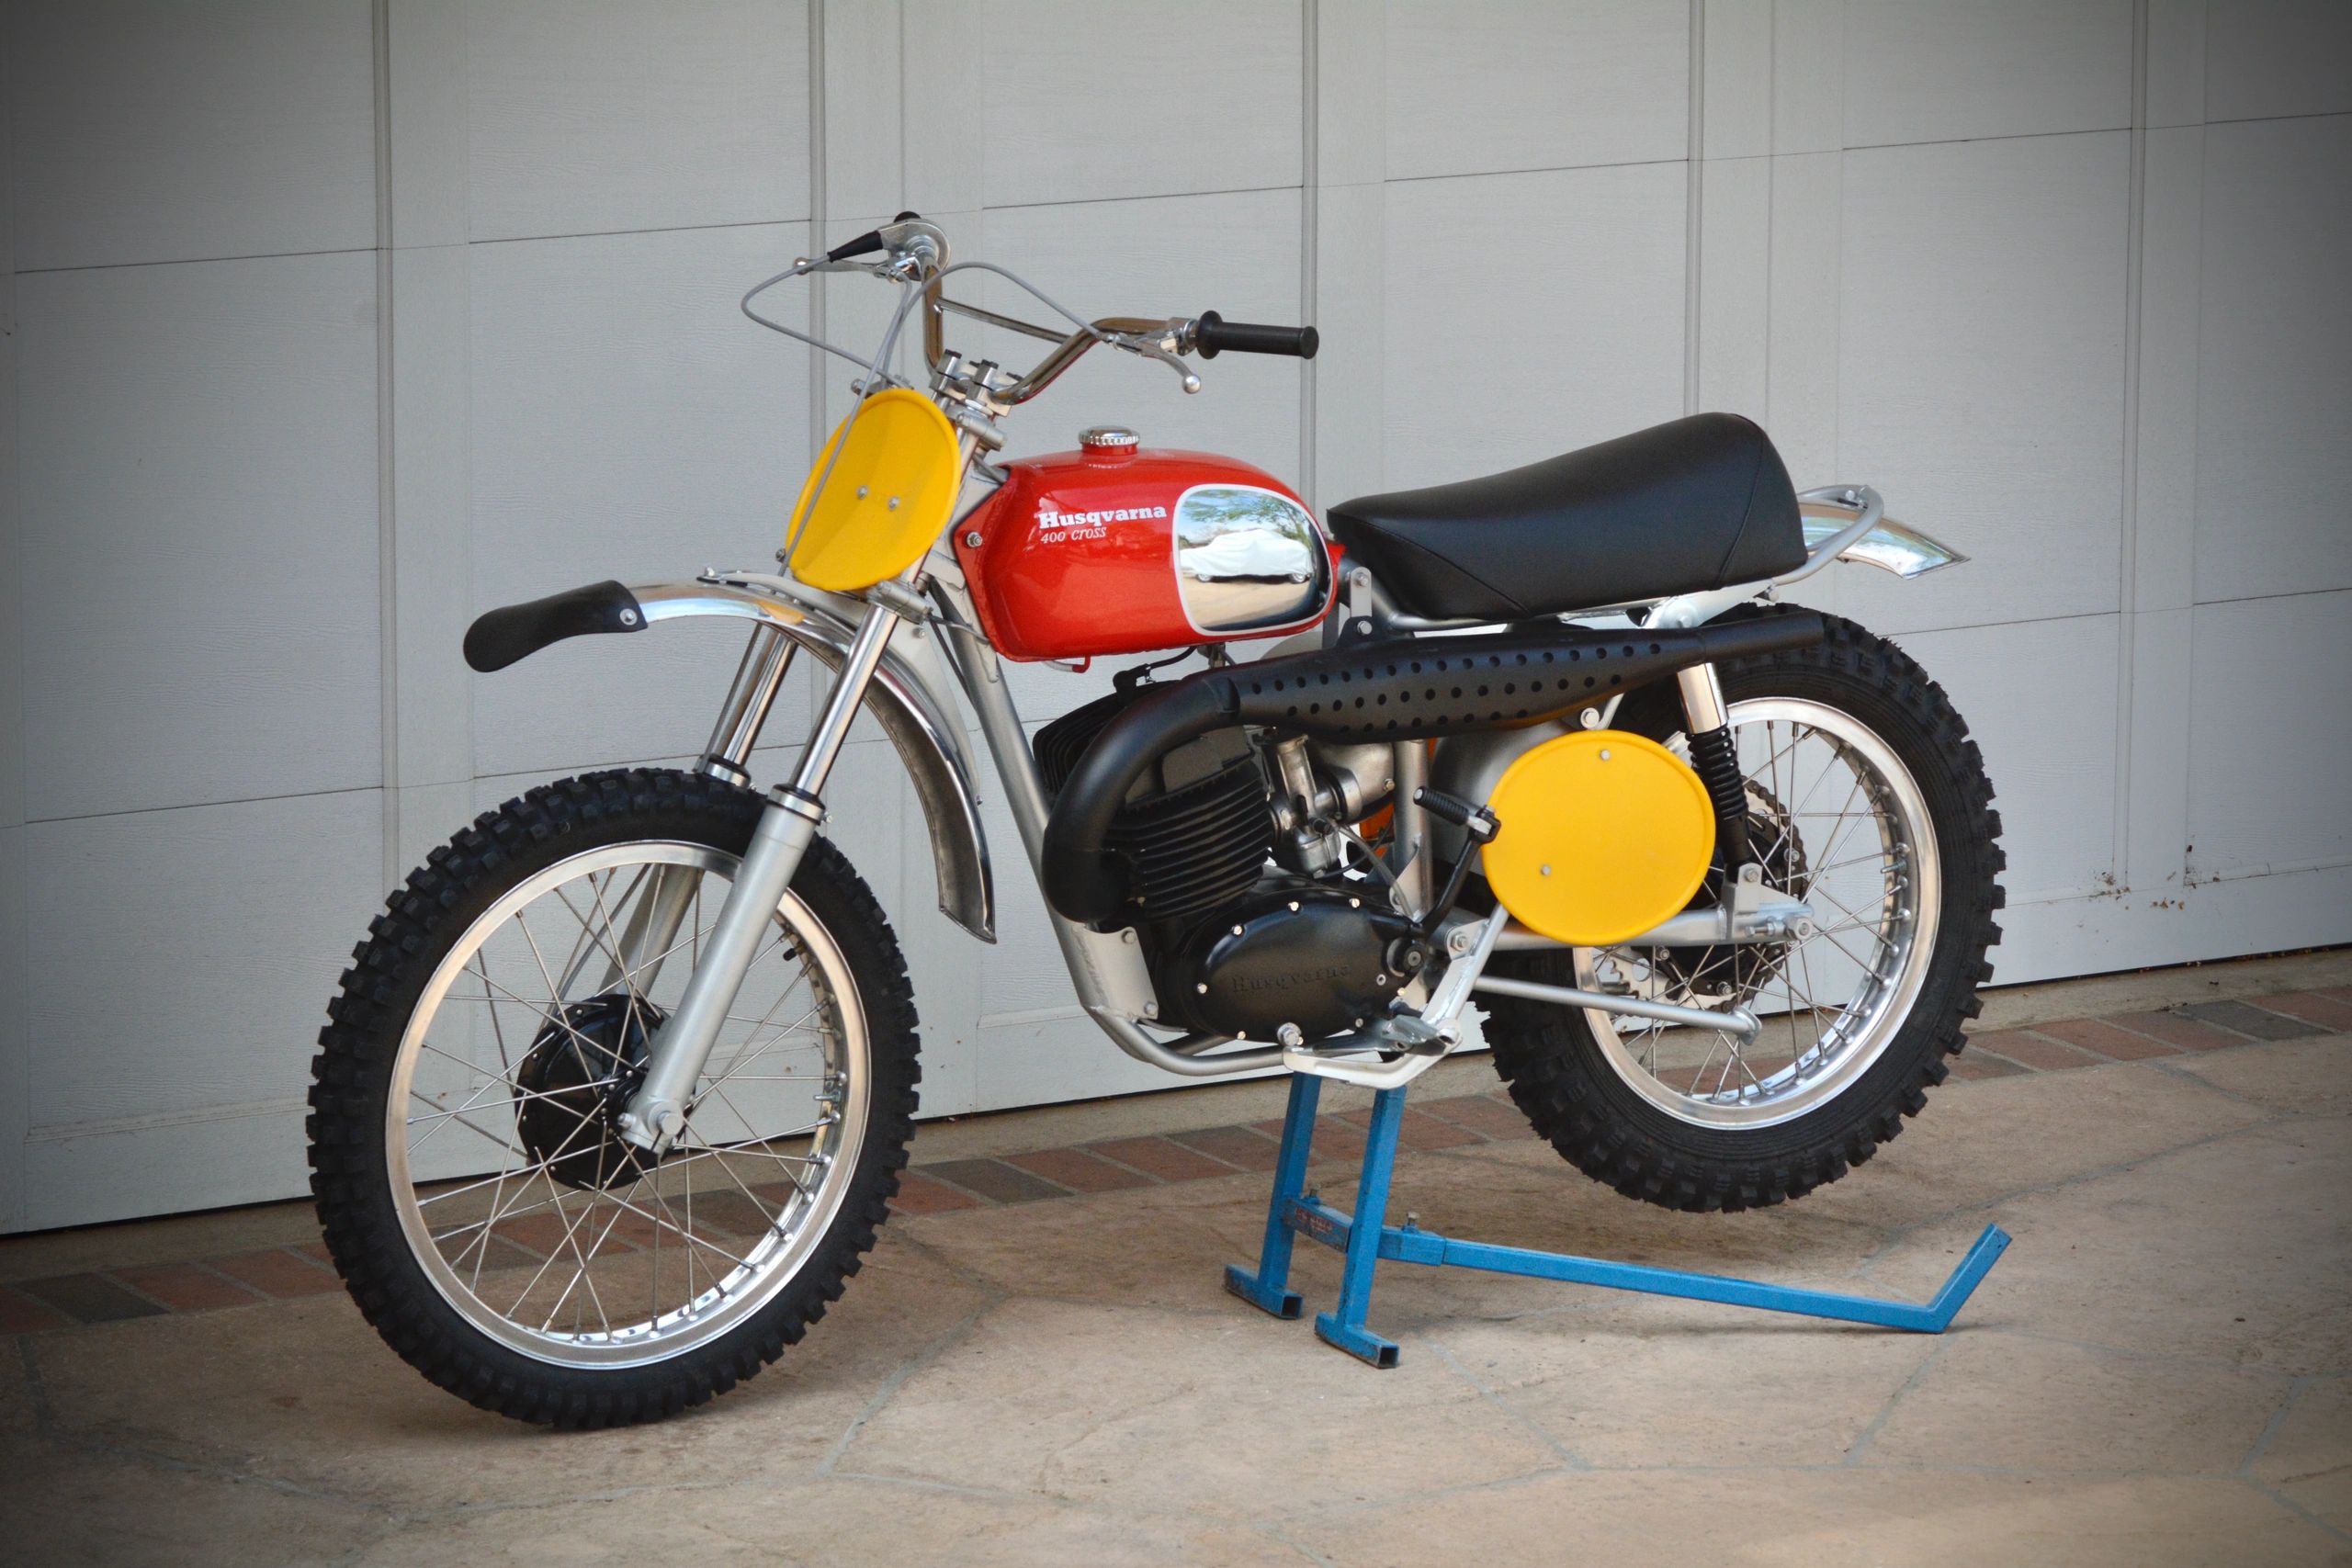 1971 Husqvarna 400 Cross restored vintage motocross bike